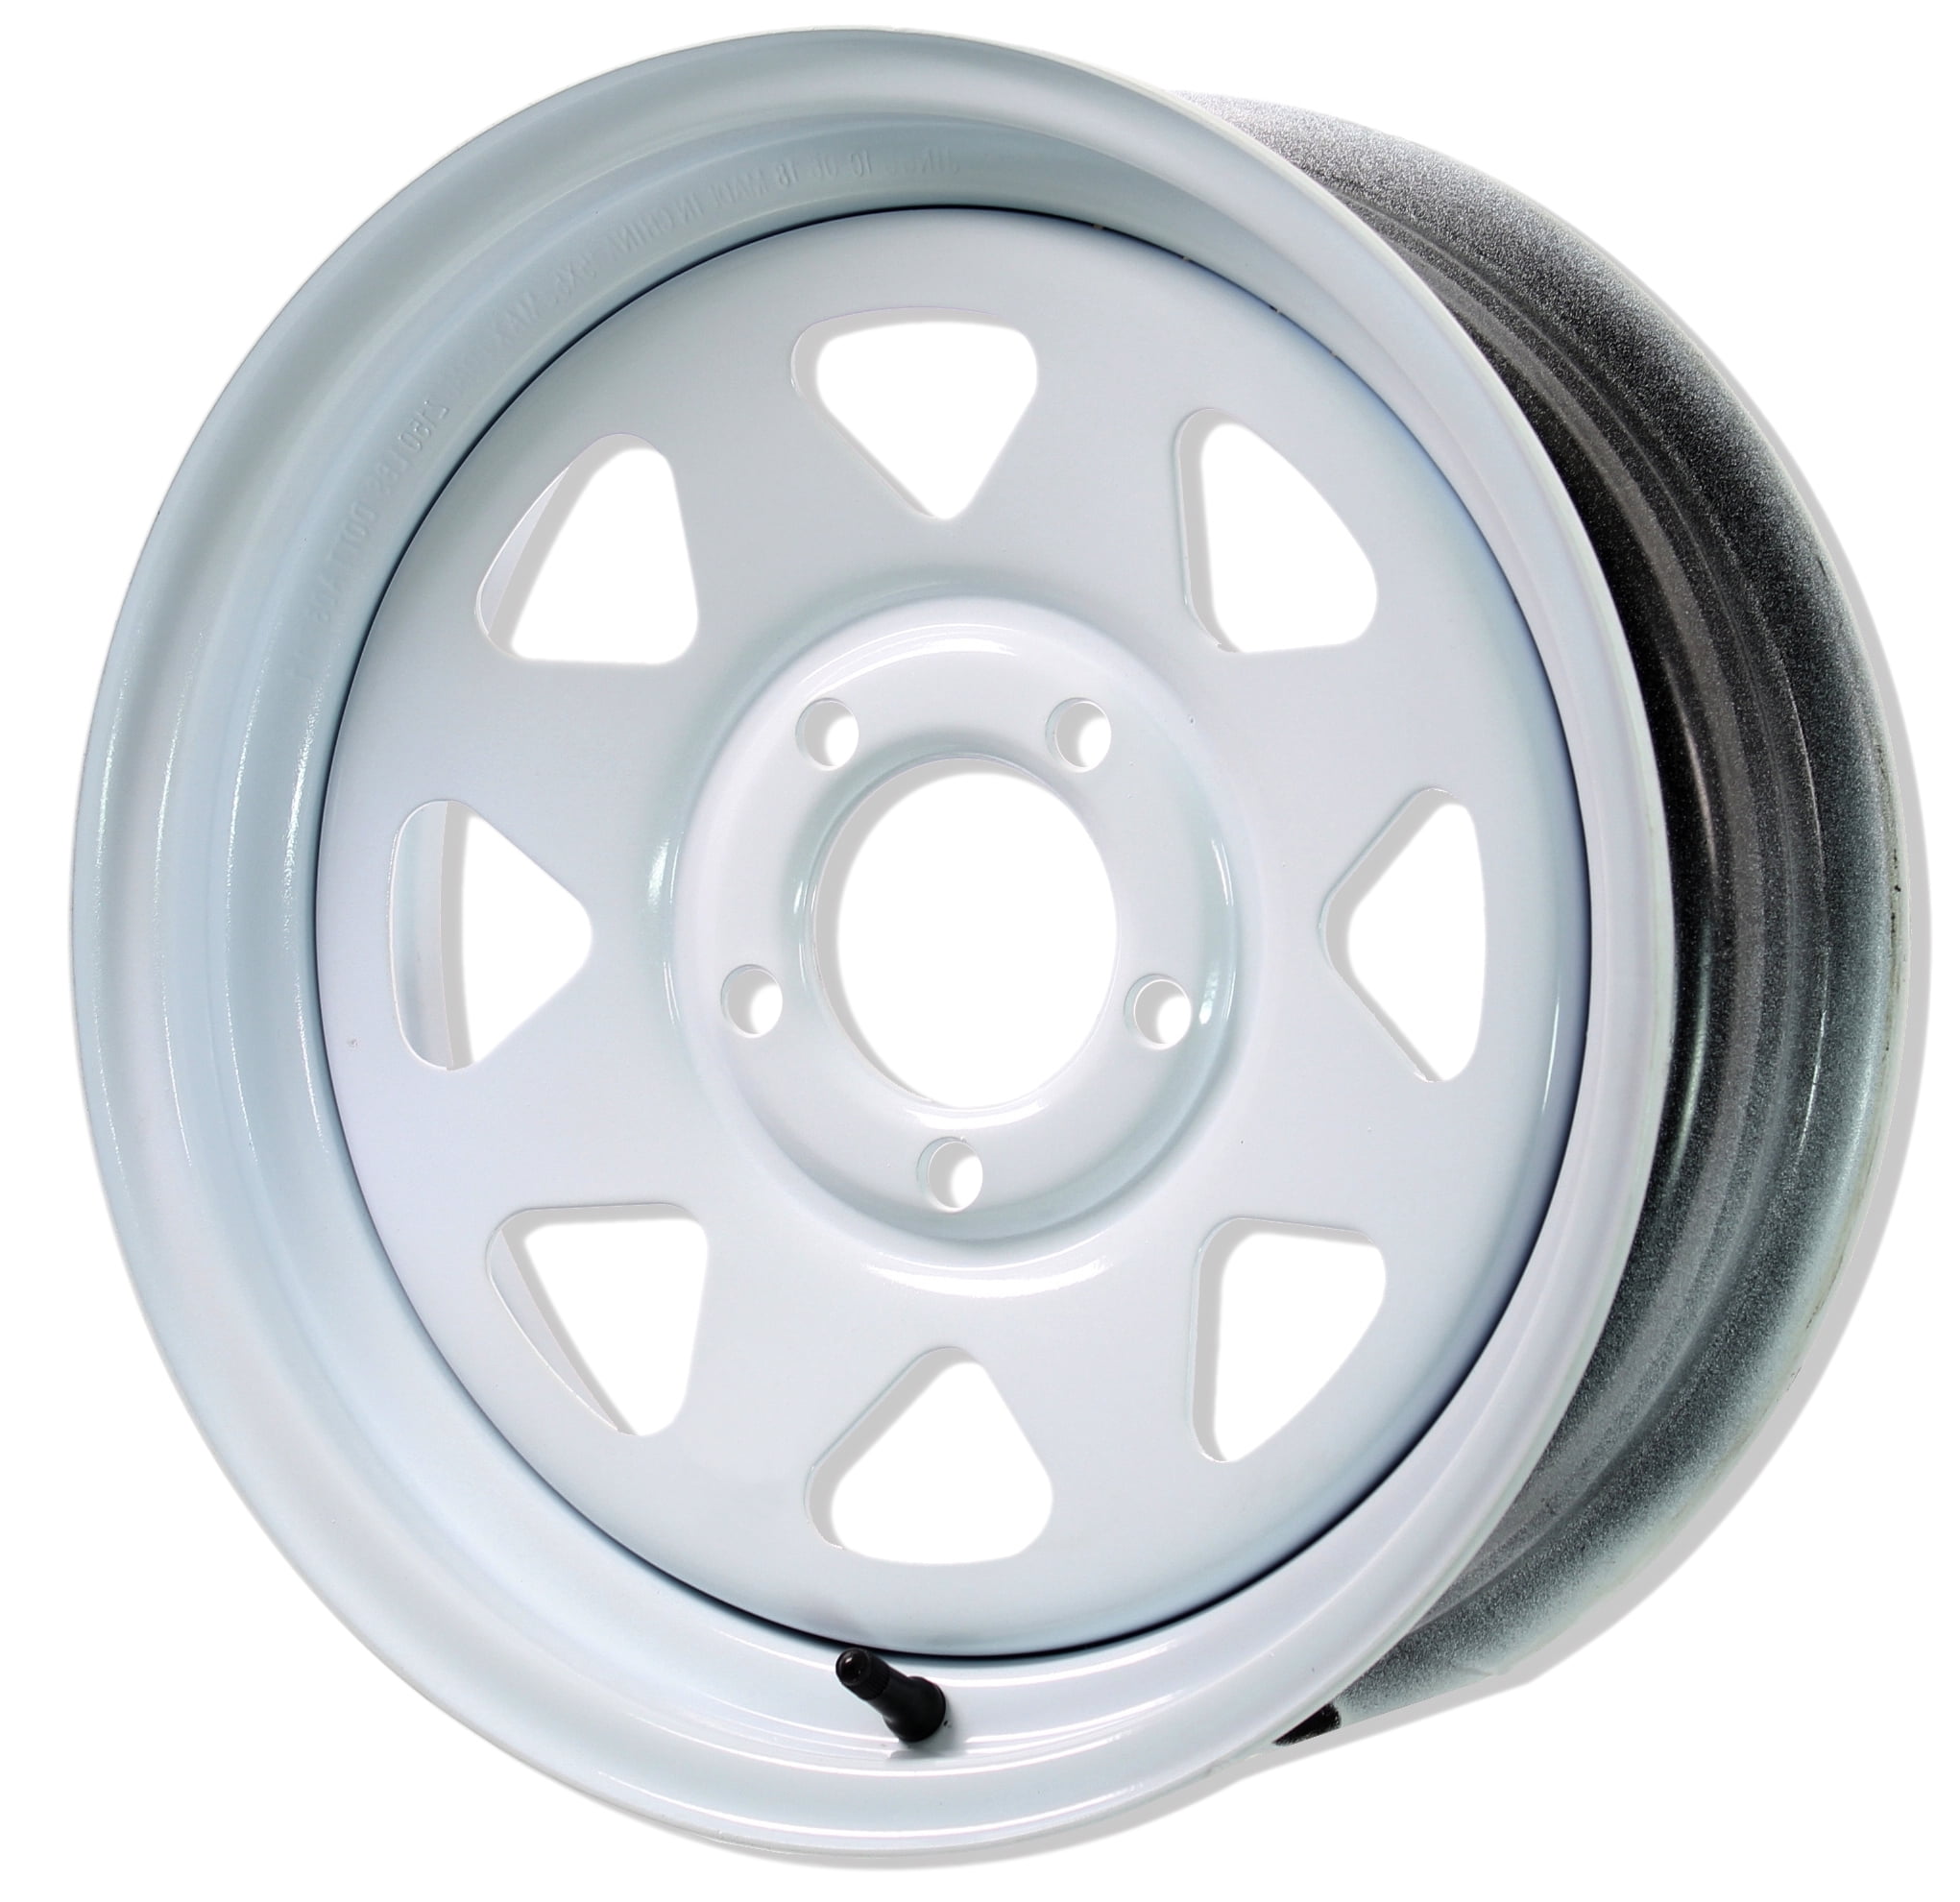 3.19 Center Bore 75PSI eCustomRim Trailer Wheel Rim 14X5.5 J 5-4.5 Silver Modular 2200 Lb